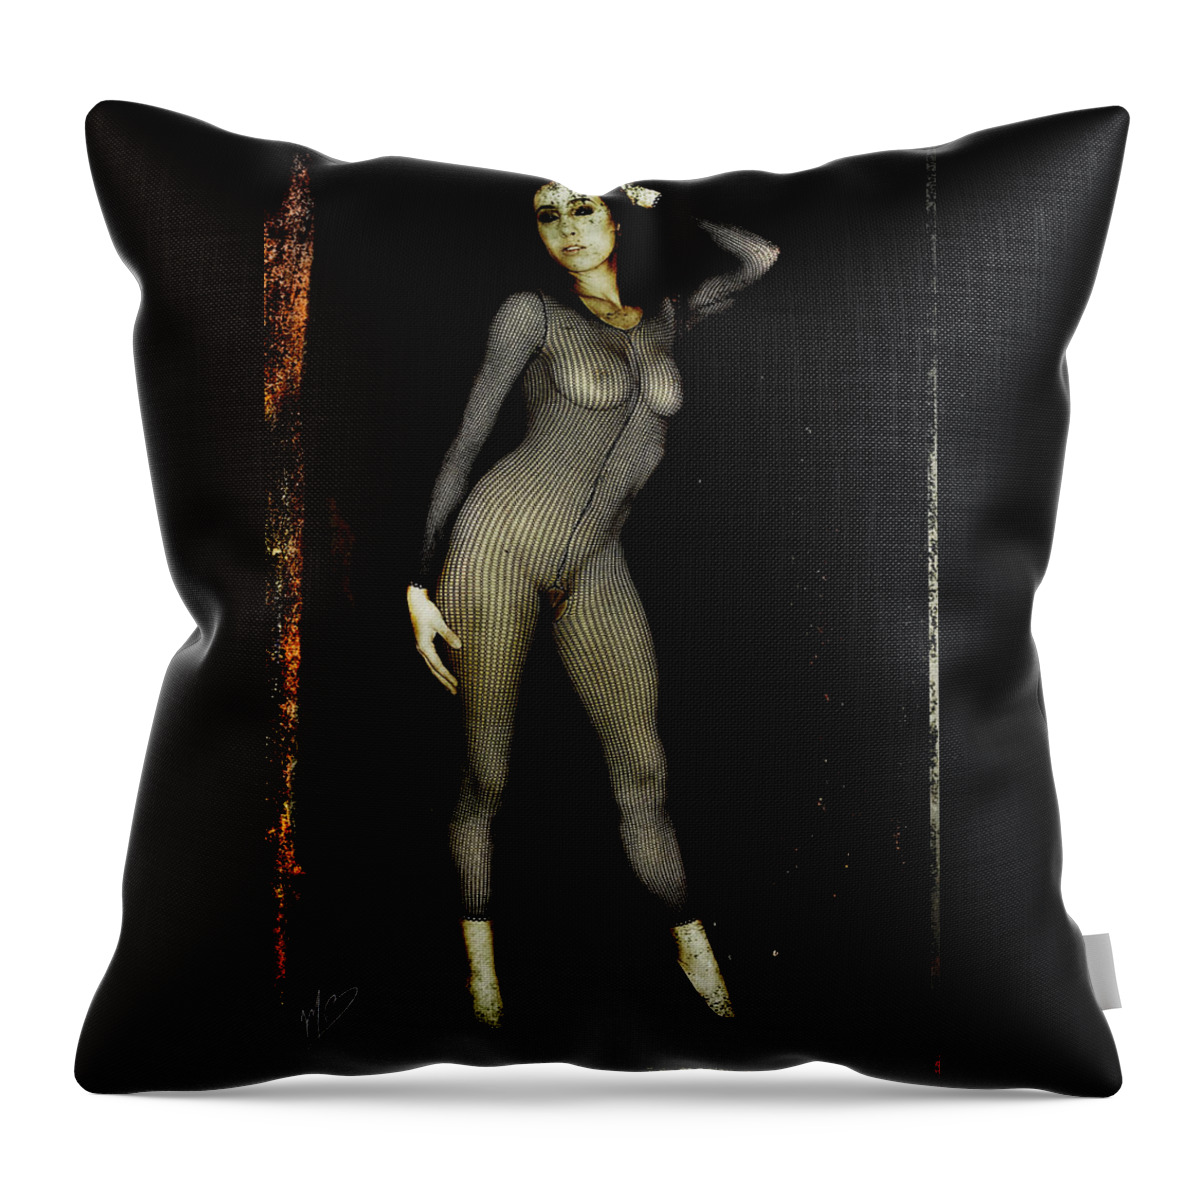 Sexy Throw Pillow featuring the digital art Ciena 1 by Mark Baranowski